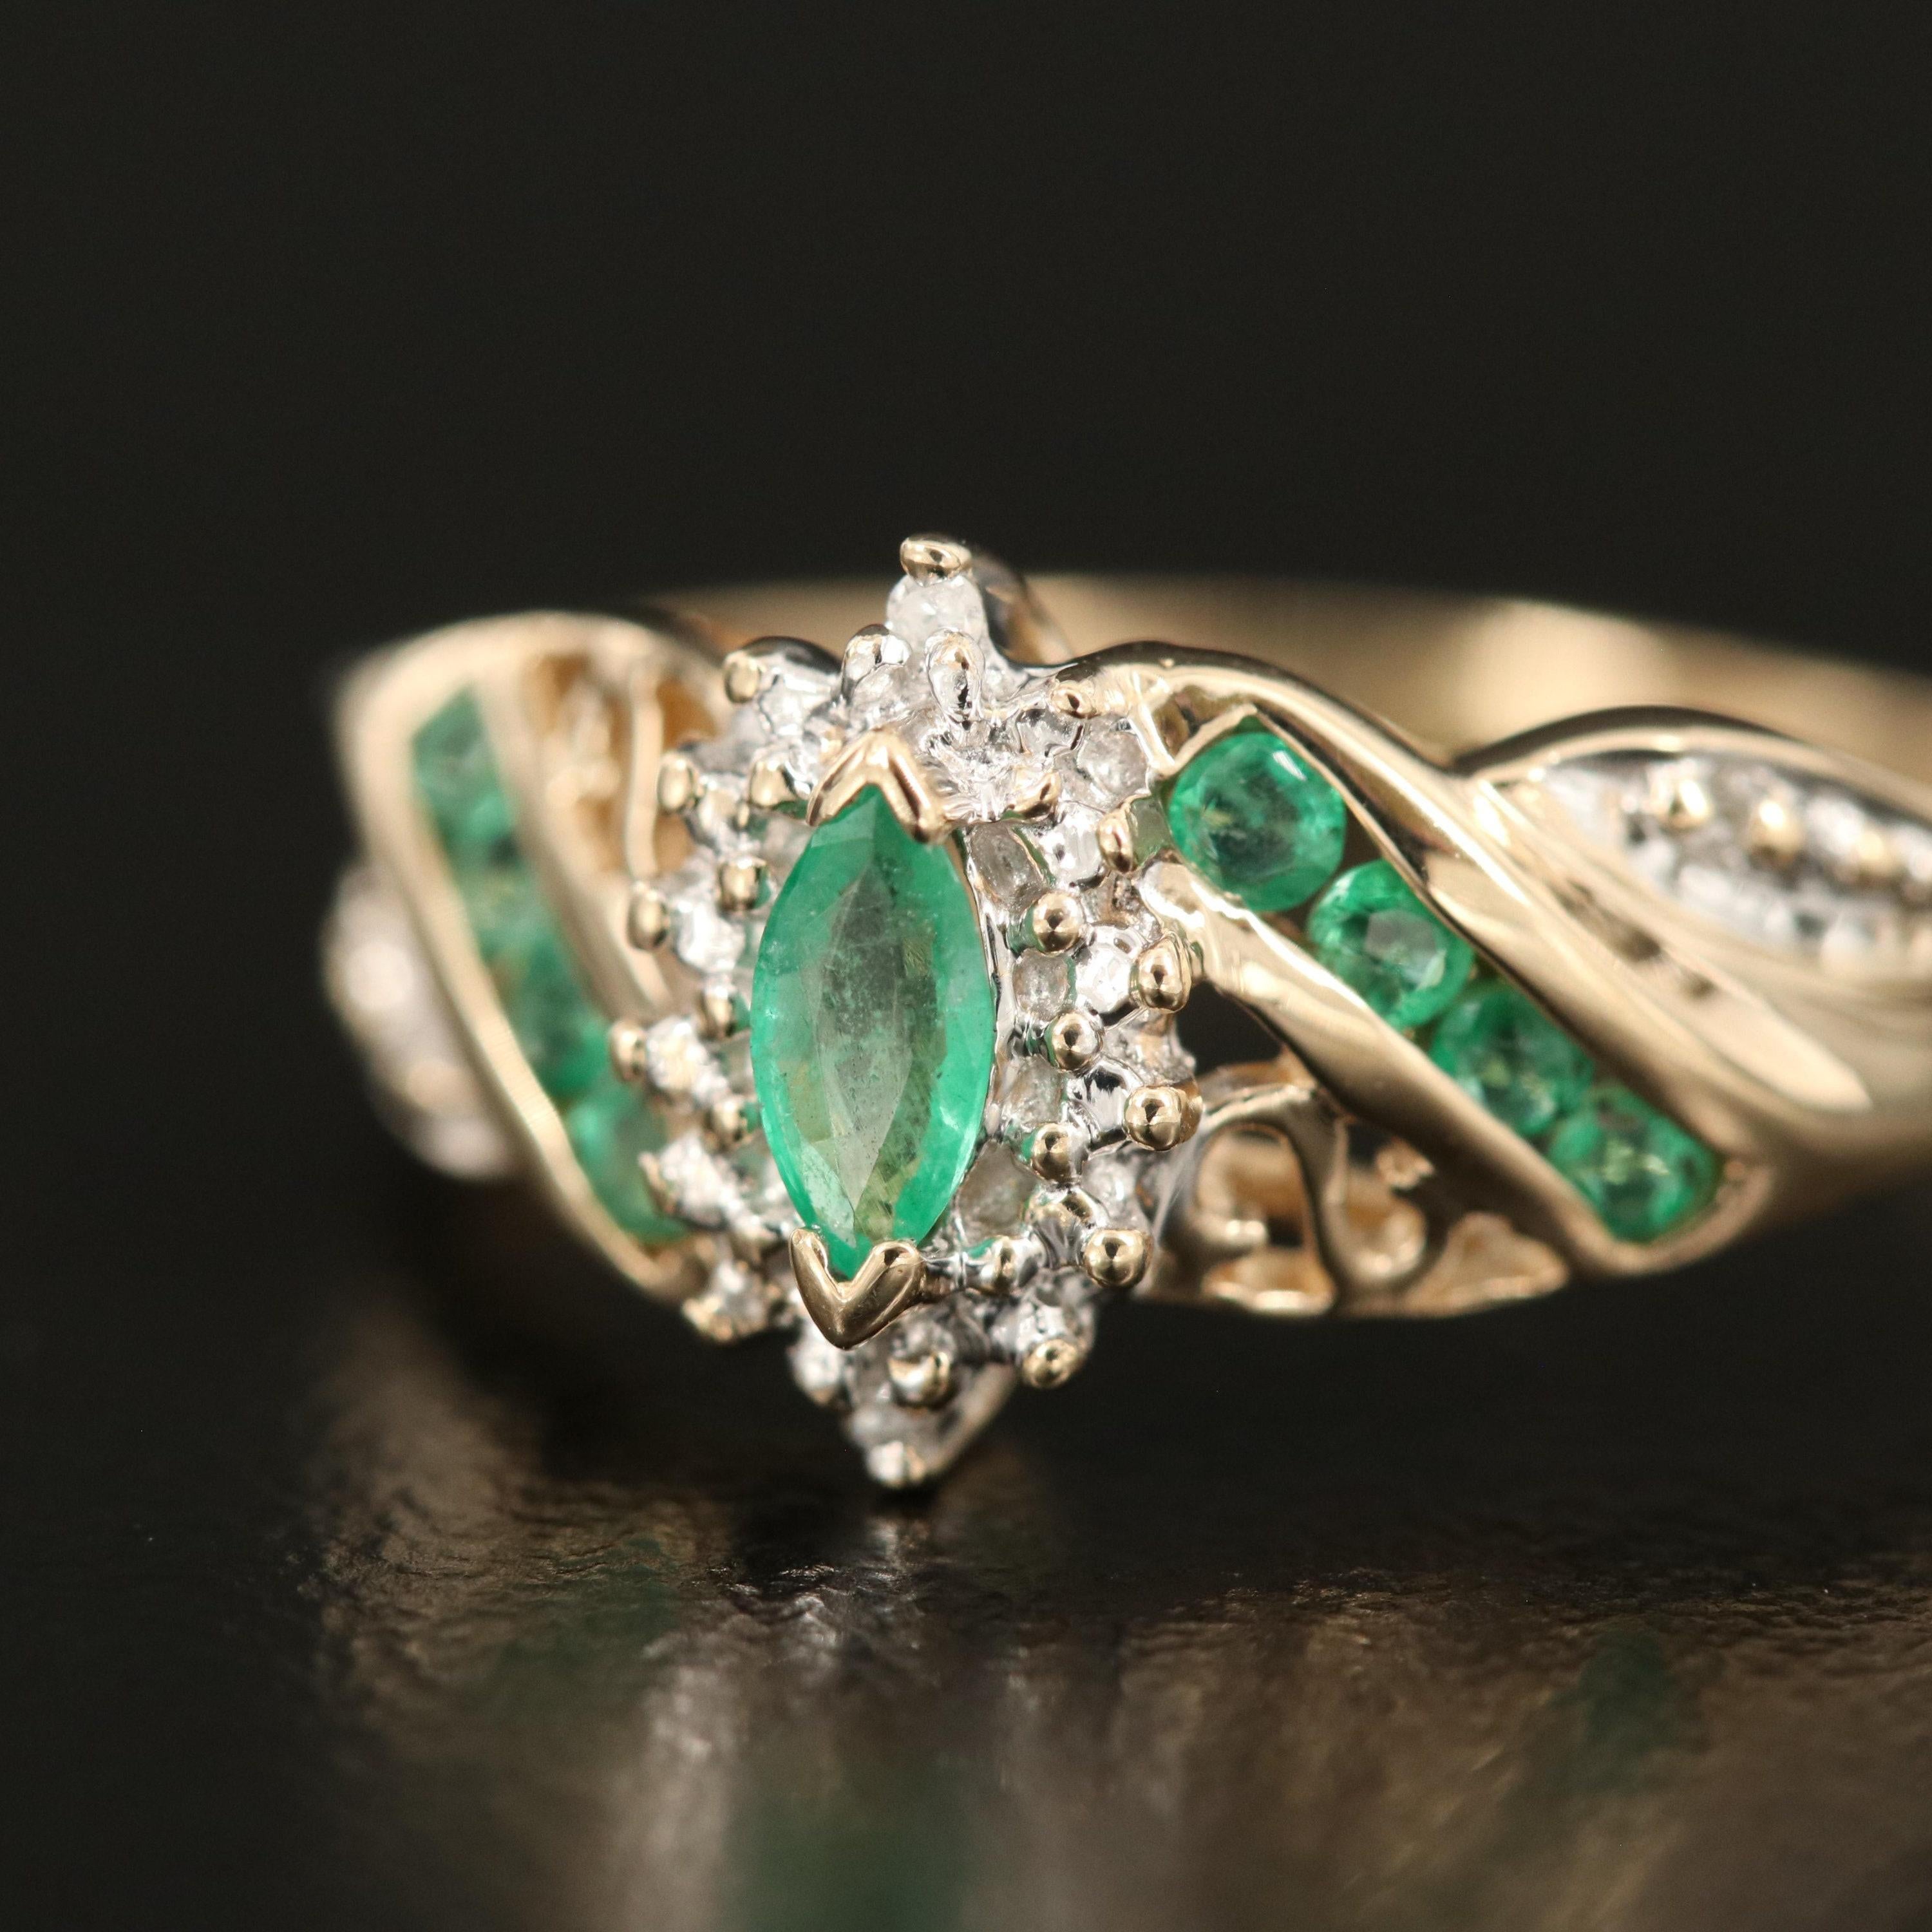 For Sale:  1.5 Carat Marquise Cut Emerald Diamond Bridal Ring Diamond Emerald Cocktail Ring 2